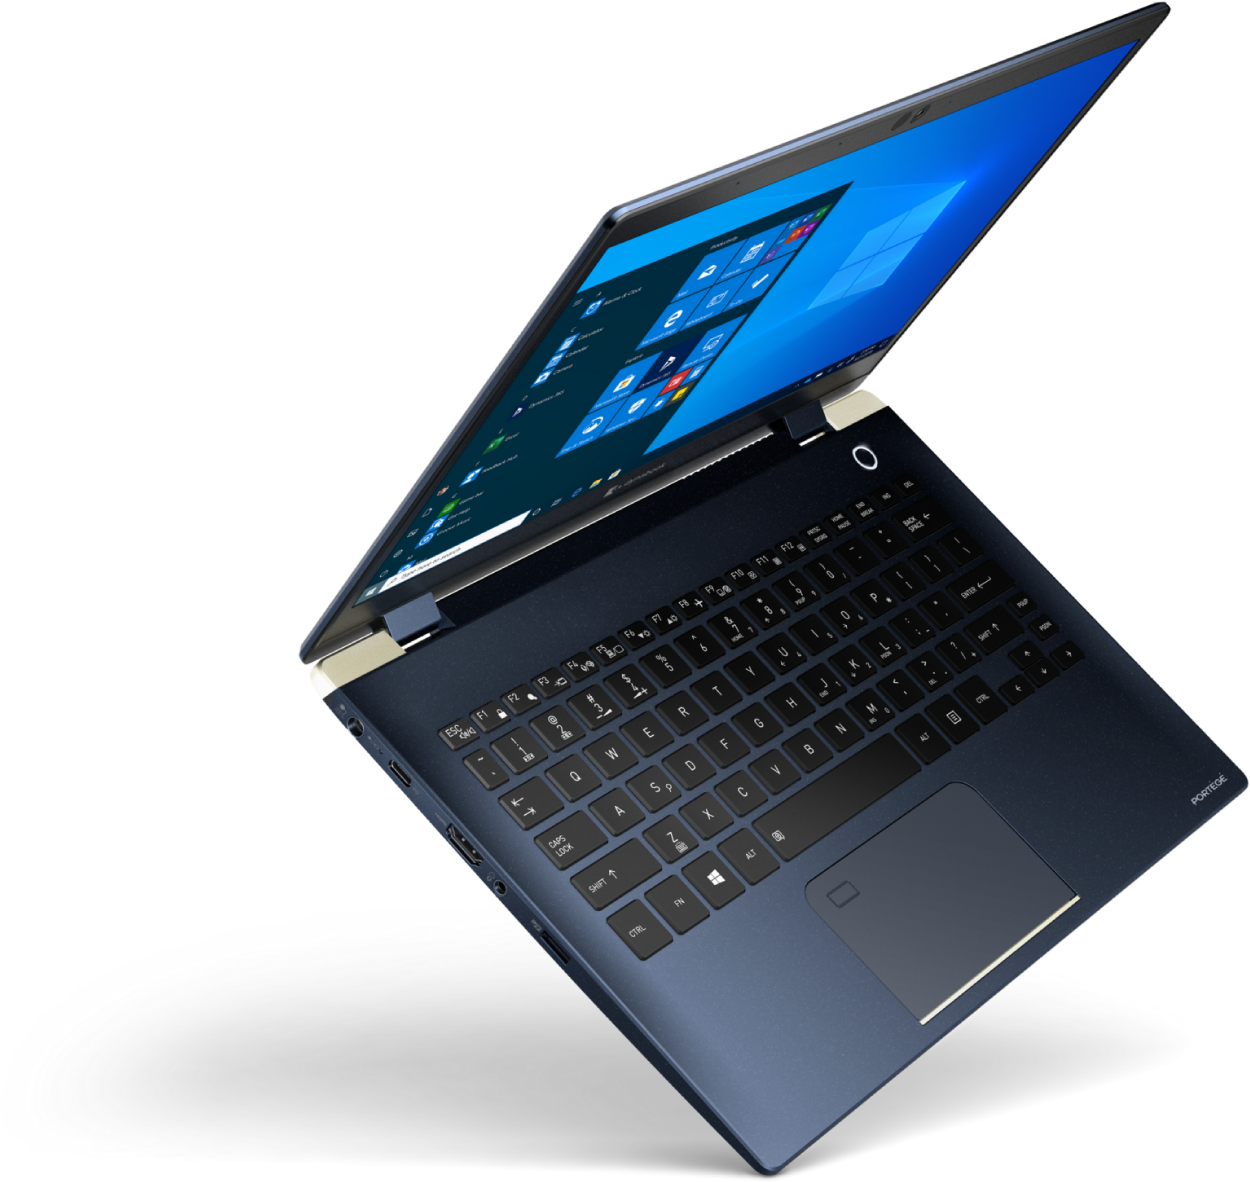 World’s Lightest 13.3-inch Laptop